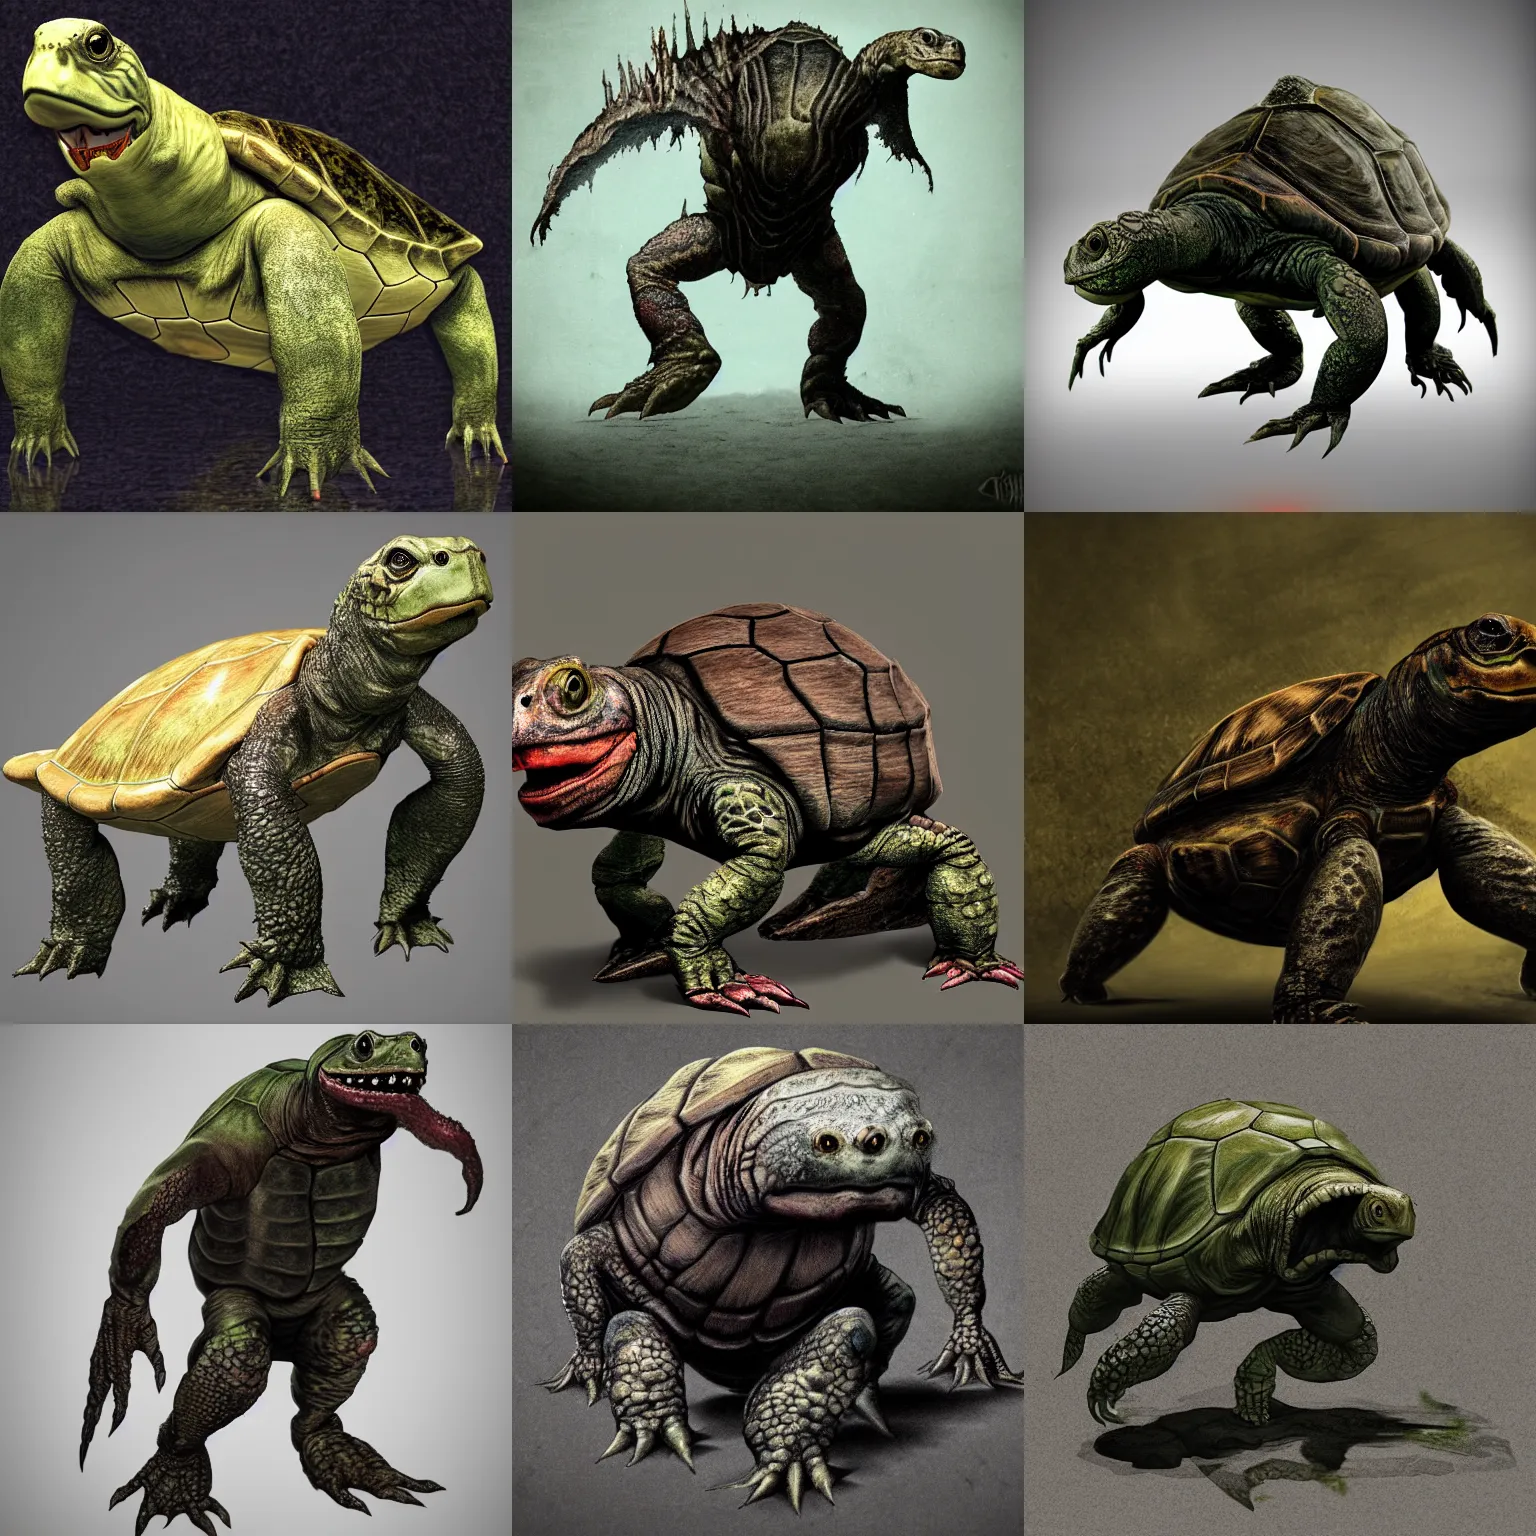 Prompt: bipedal turtle monster, photorealistic, grimdark, gruesome